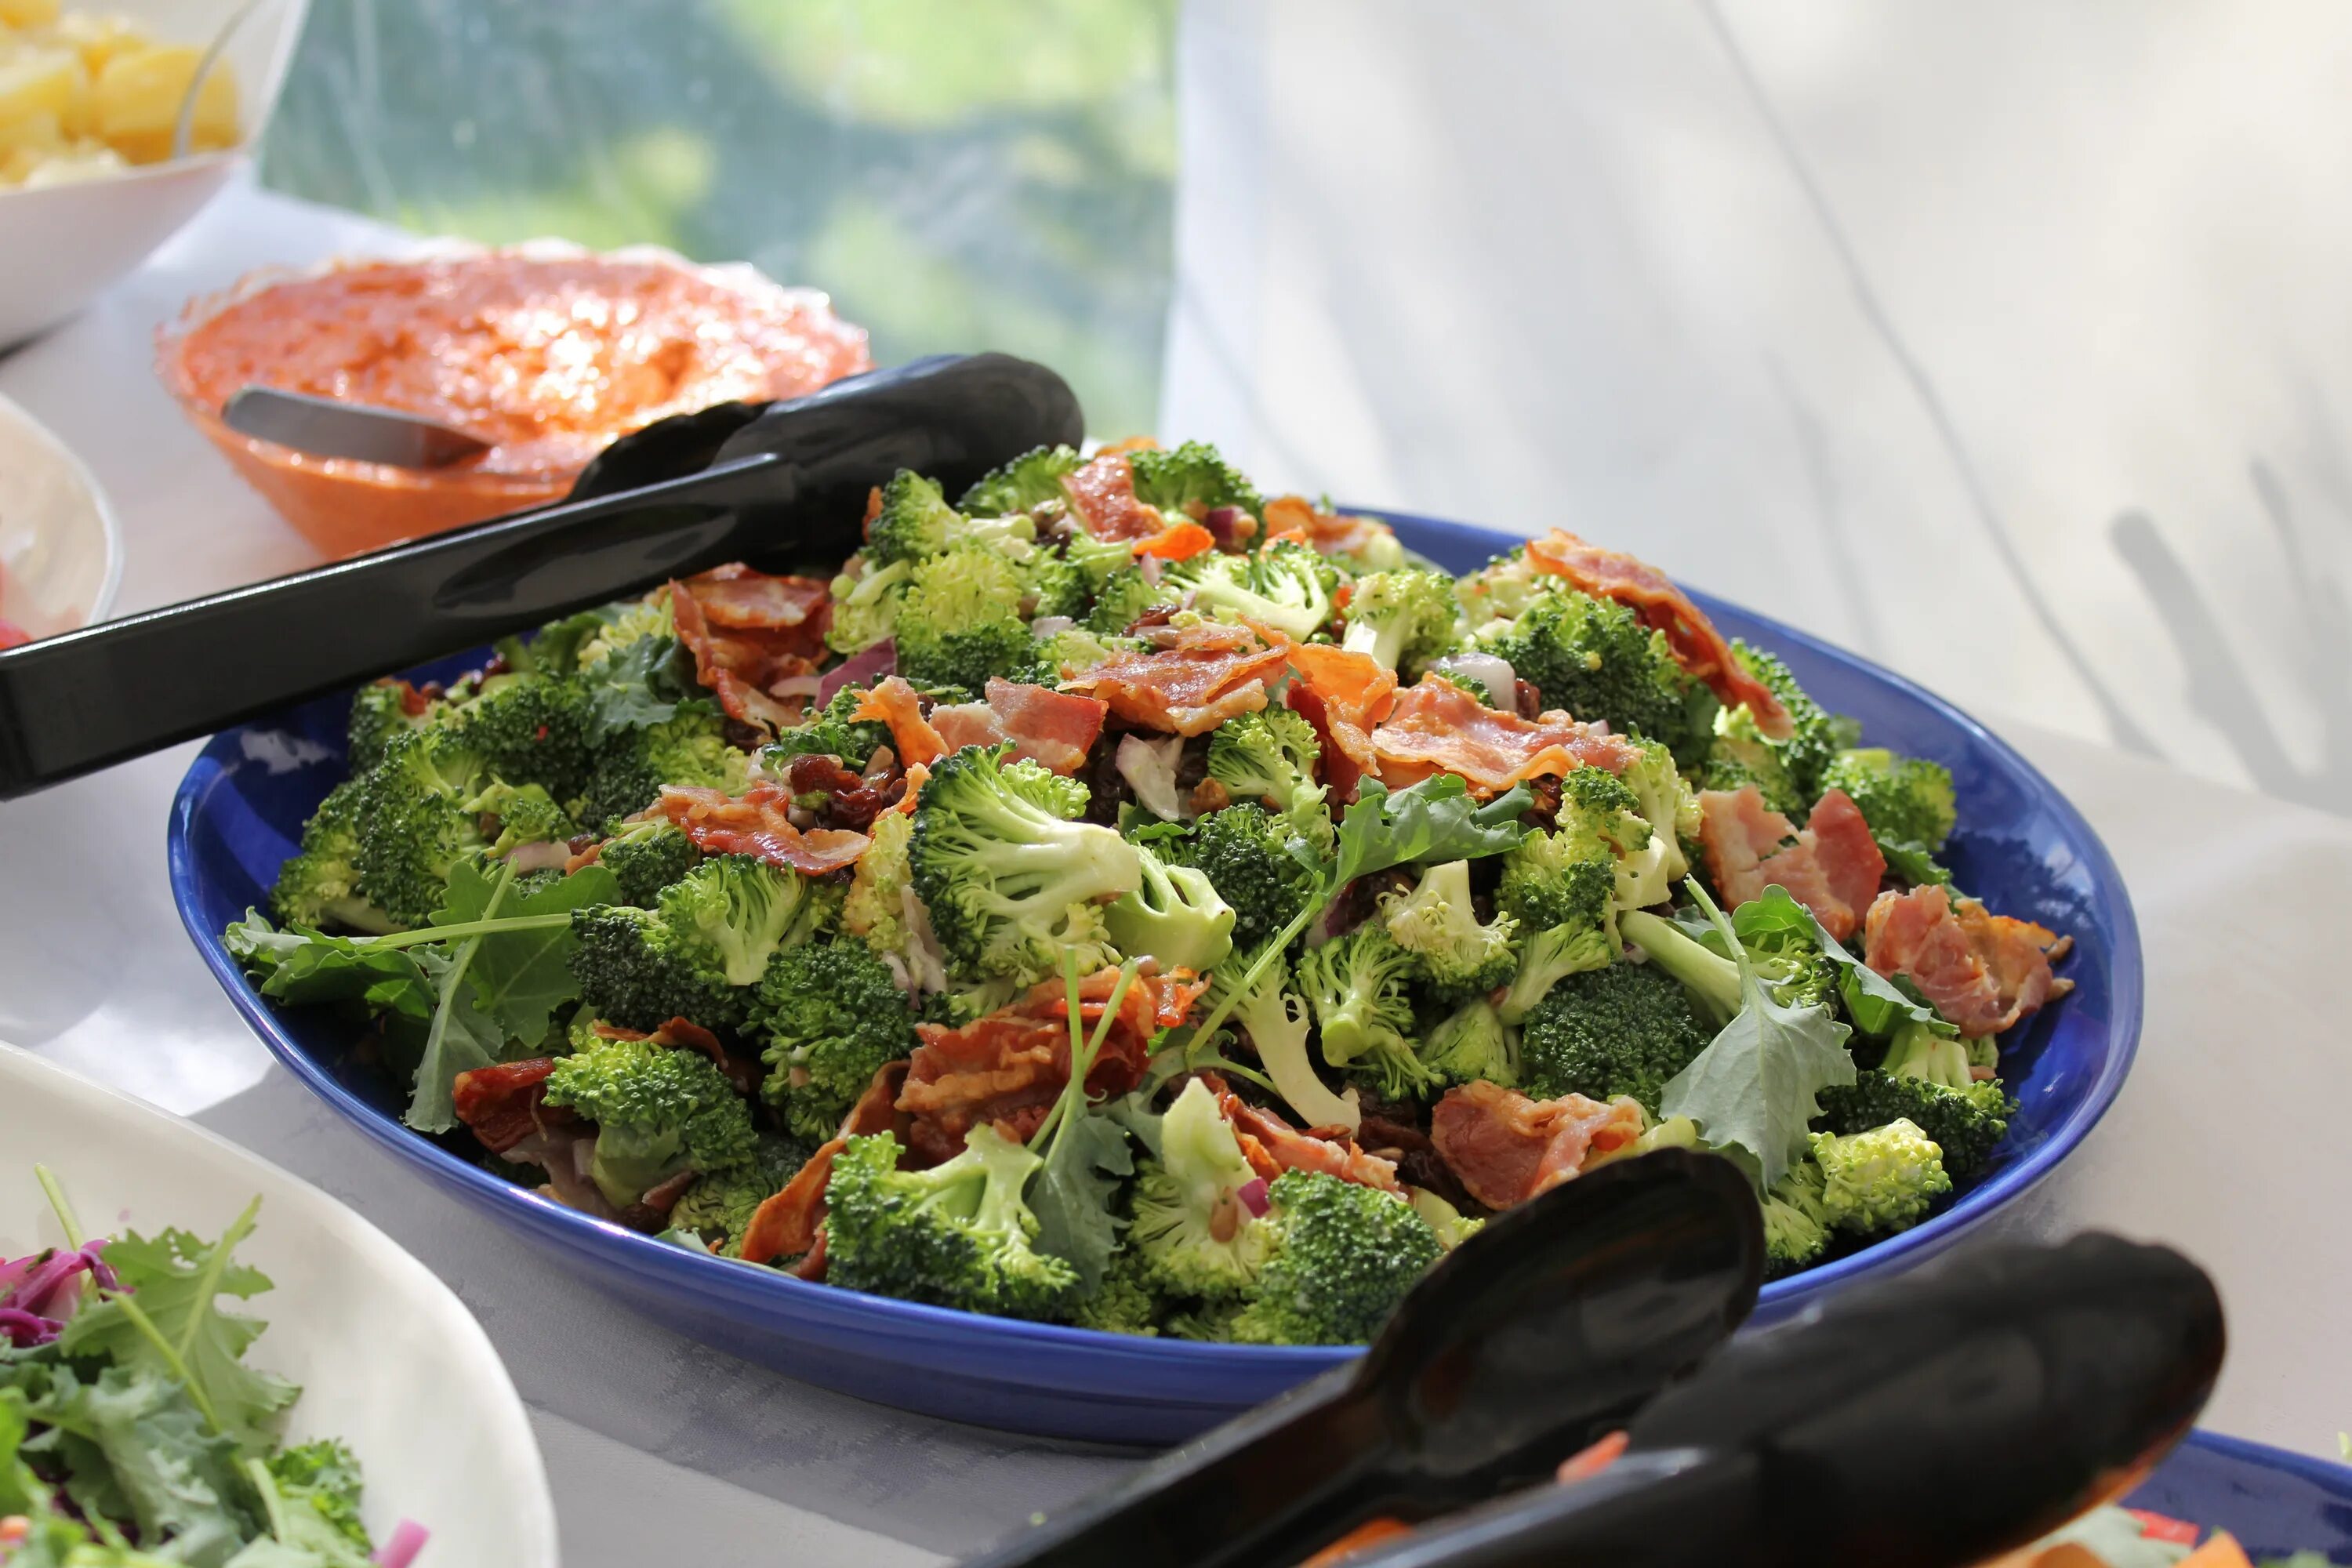 Vegetable lunch. Салат из брокколи. Овощной салат с брокколи. Зеленая еда. Салат с семгой и брокколи.